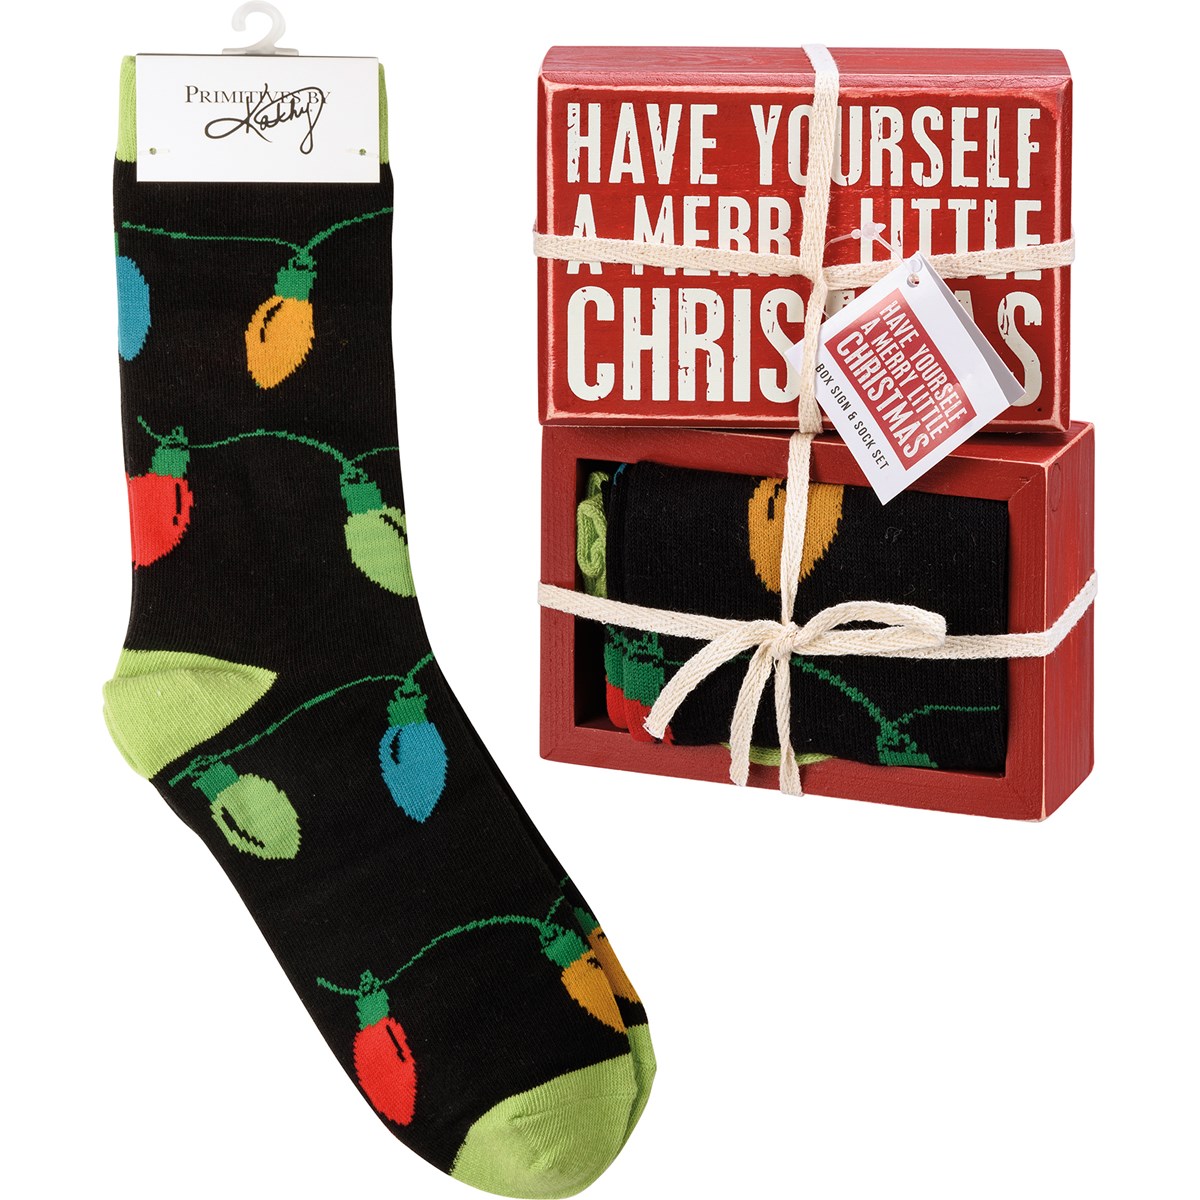 A Merry Little Christmas Box Sign And Sock Set - Wood, Cotton, Nylon, Spandex, Ribbon